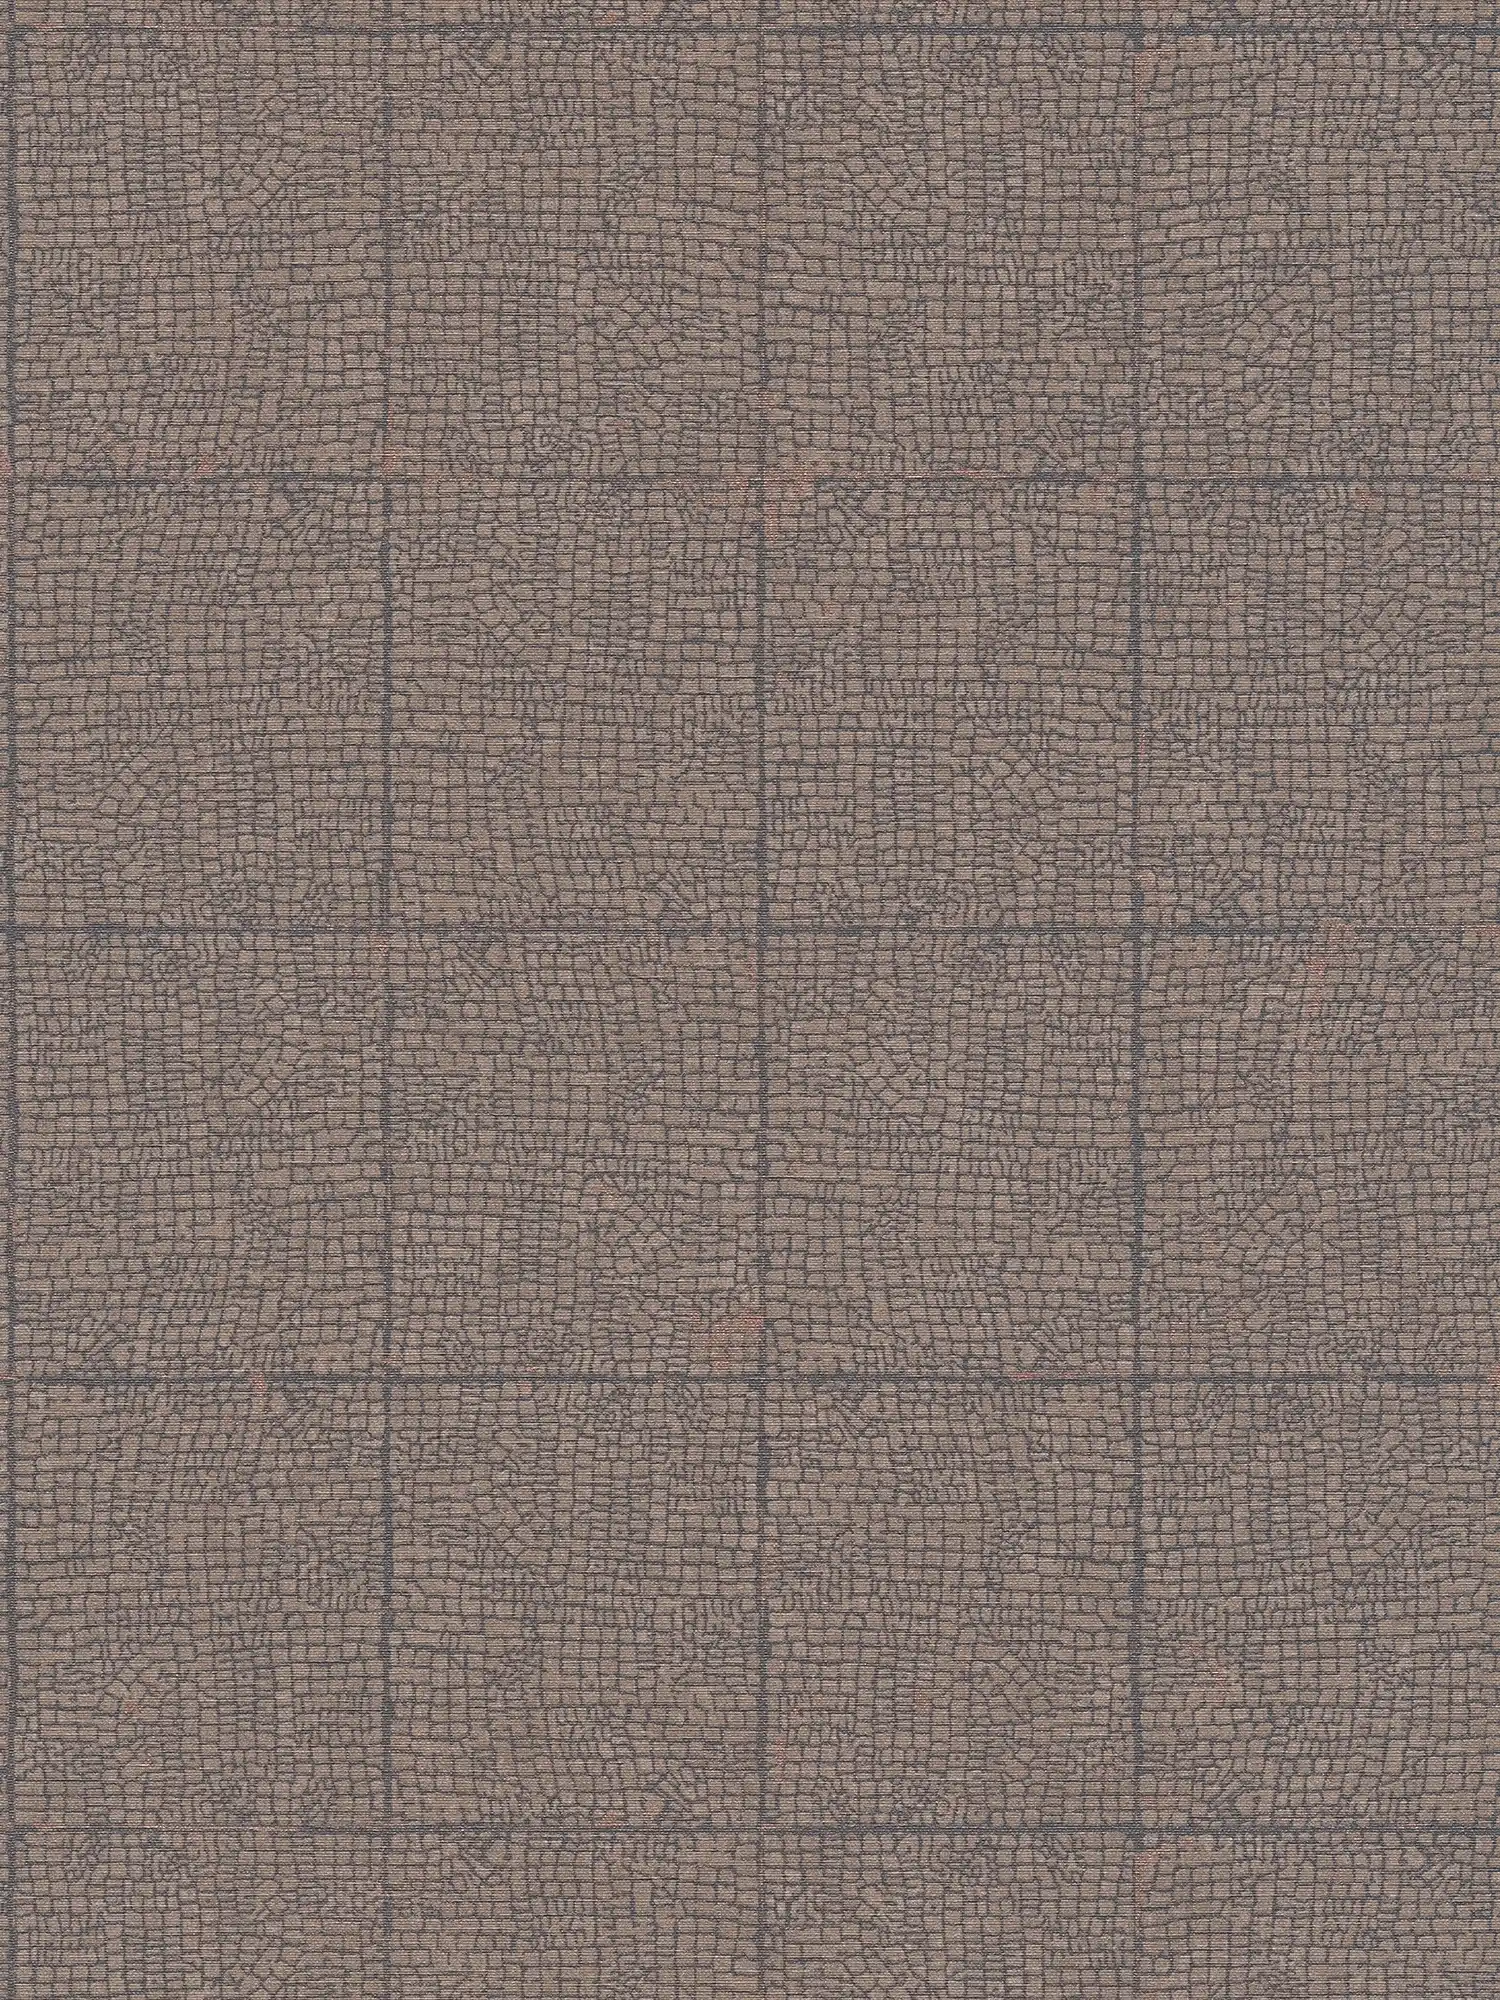 Tile optics wallpaper used look & crackle effect - brown
